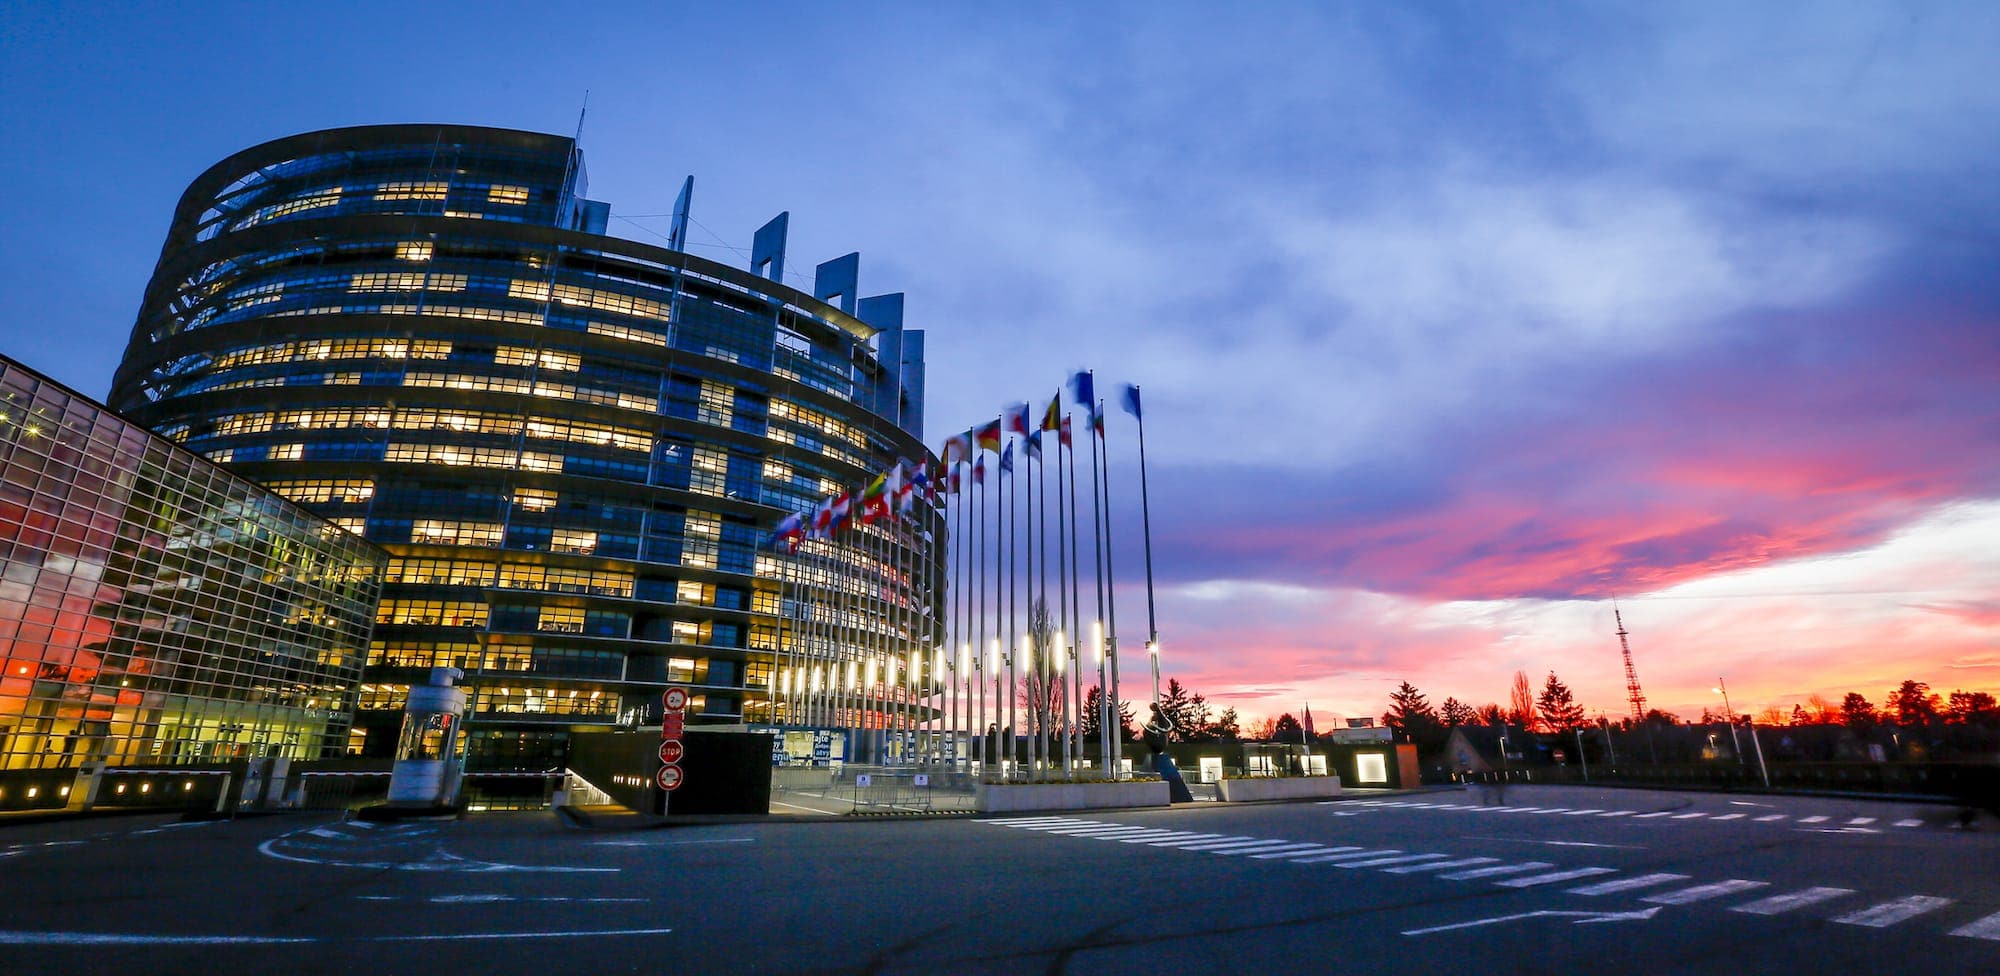 European council in strabourg parliament